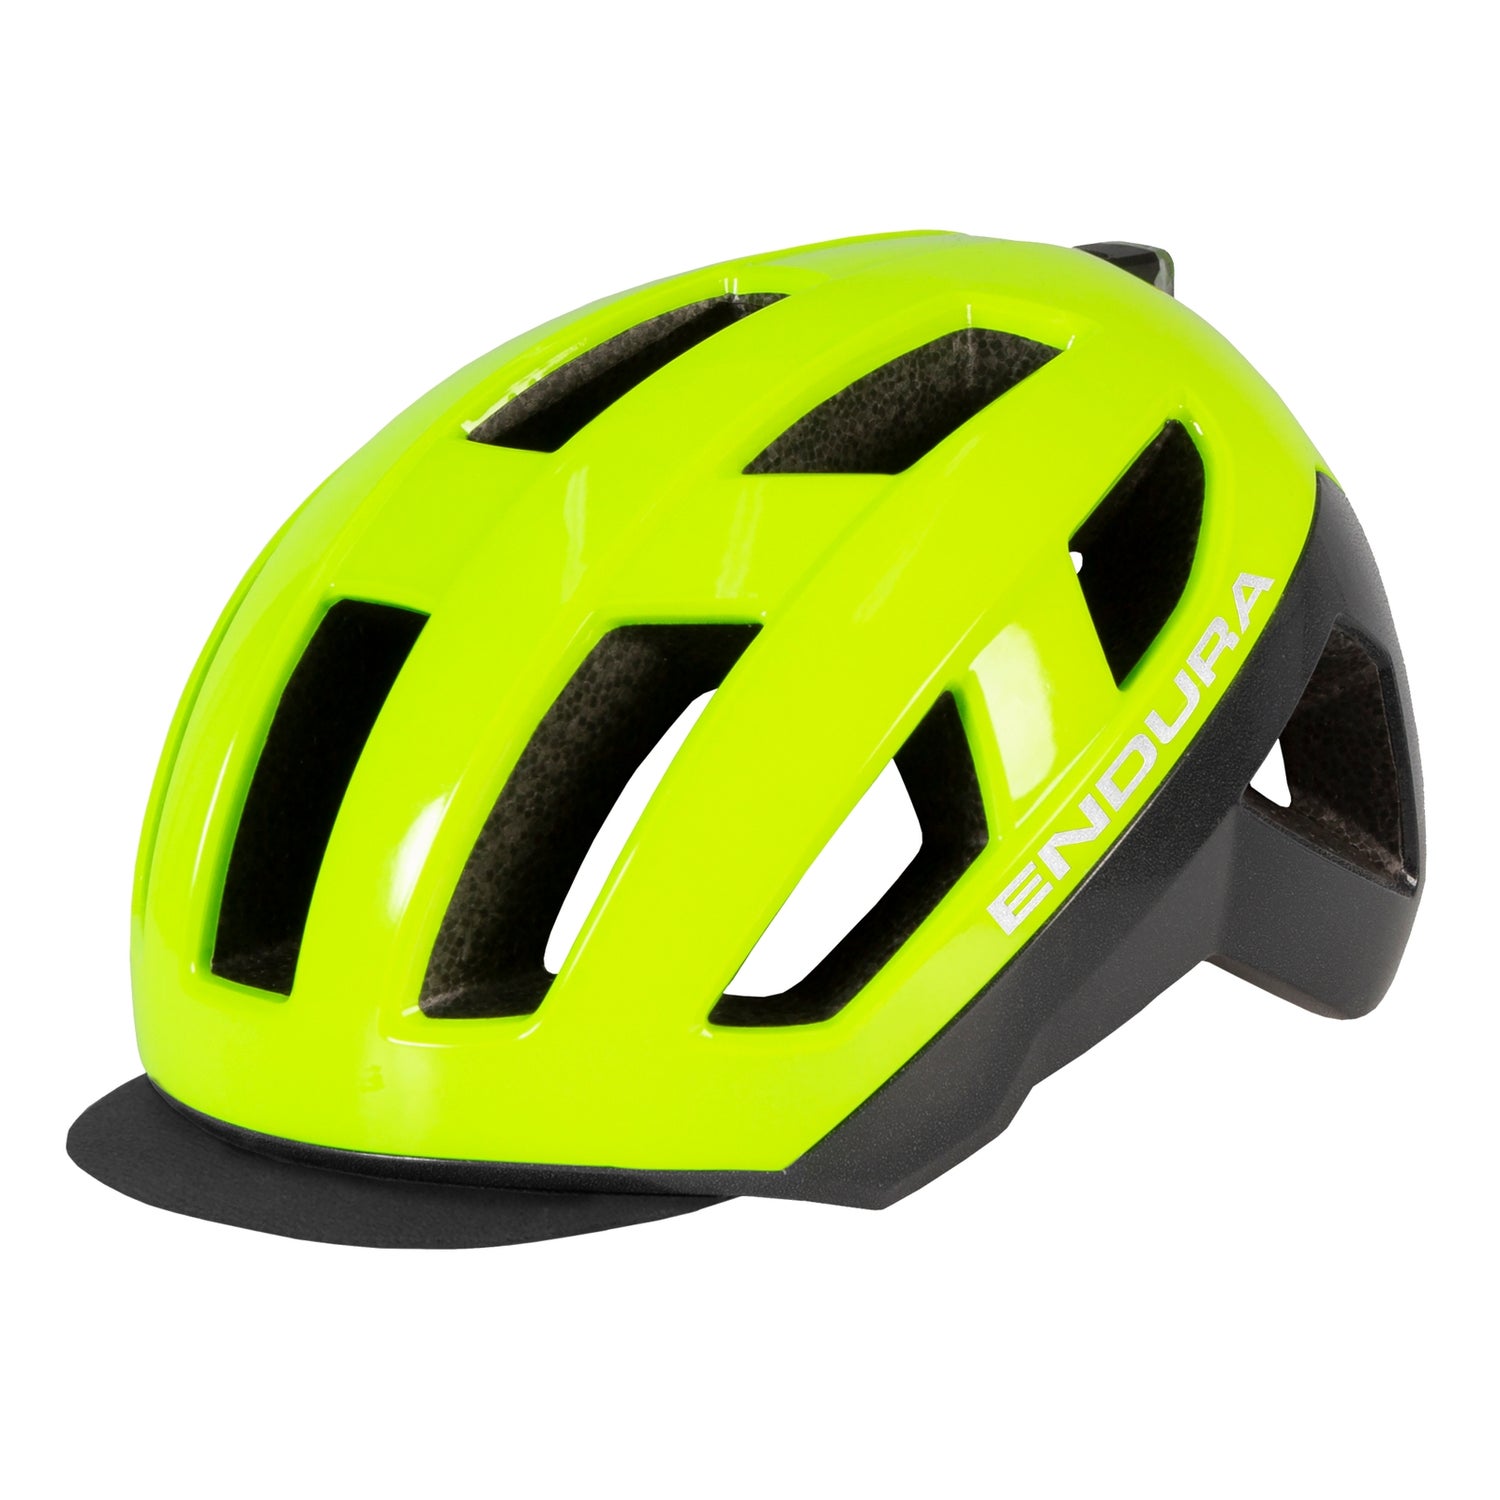 Men's Urban Luminite Helmet - Hi-Viz Yellow - S-M